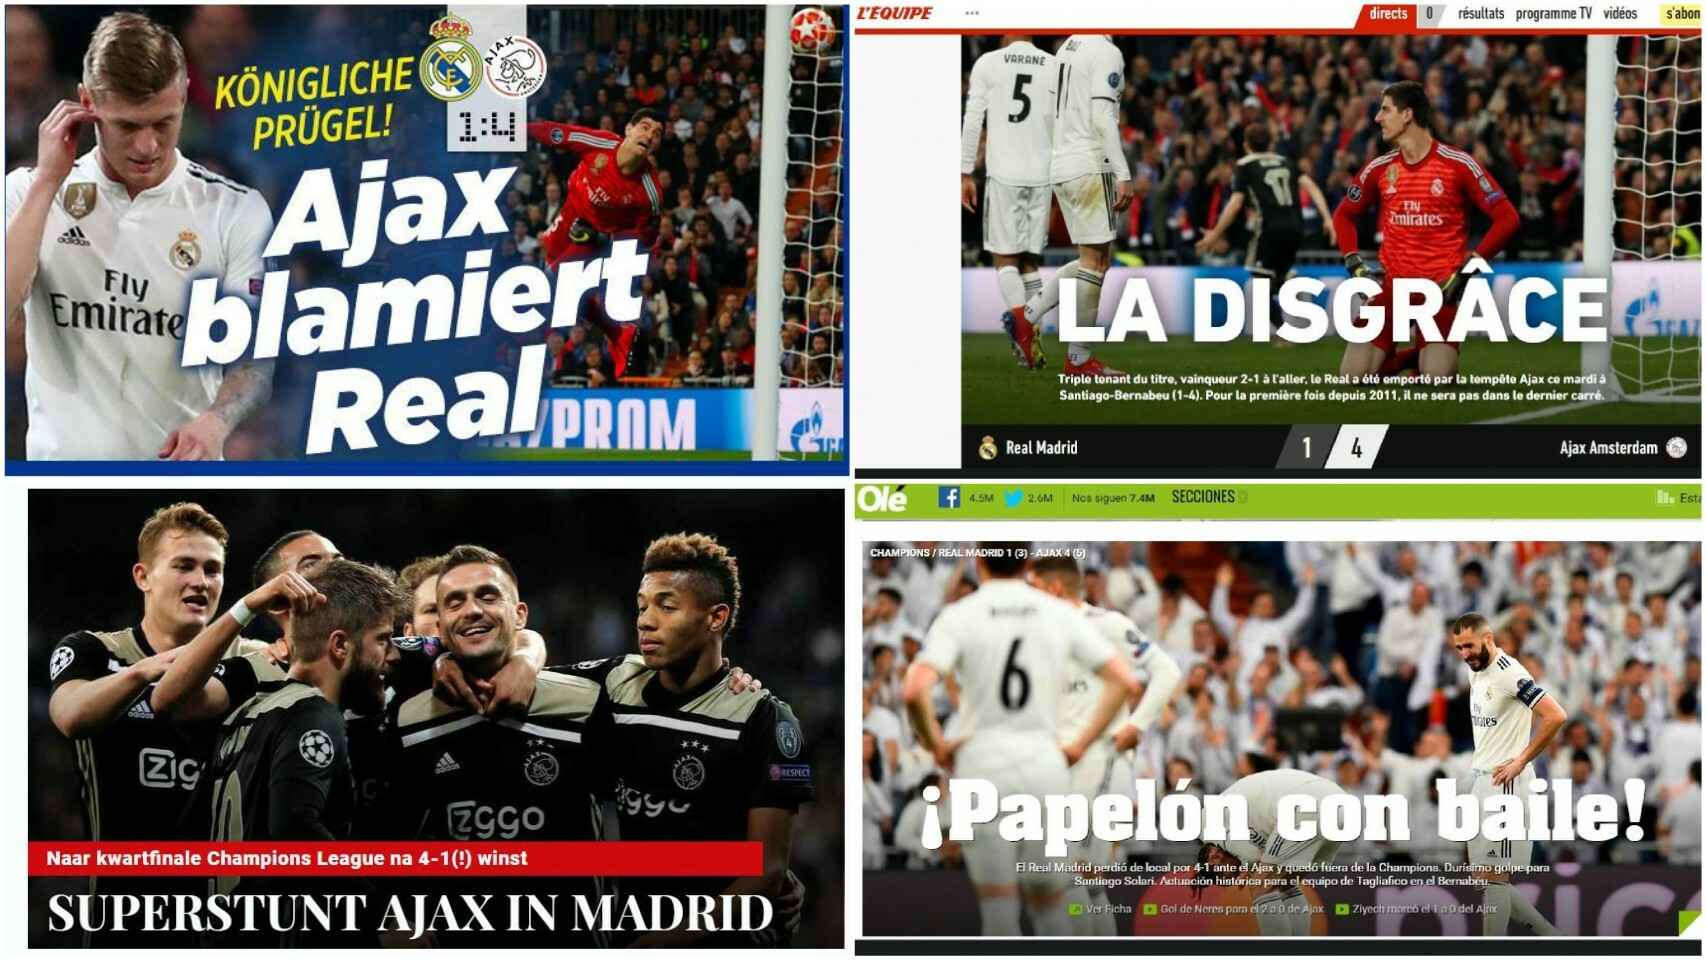 La desgracia: la prensa internacional reacciona a la debacle del Madrid en Champions